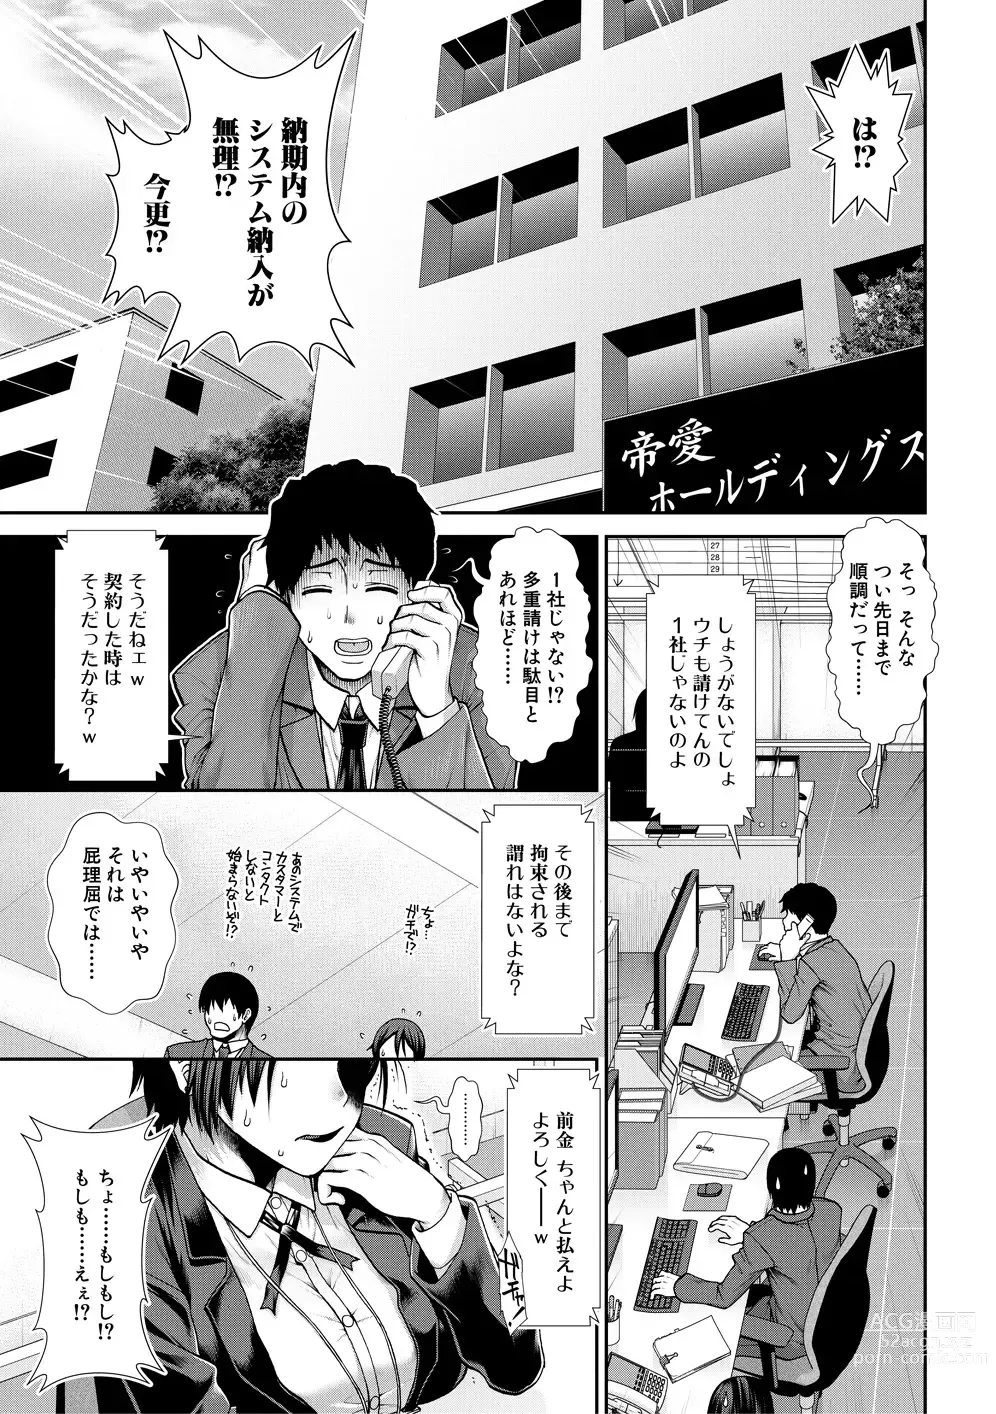 Page 3 of manga Ketsuhara